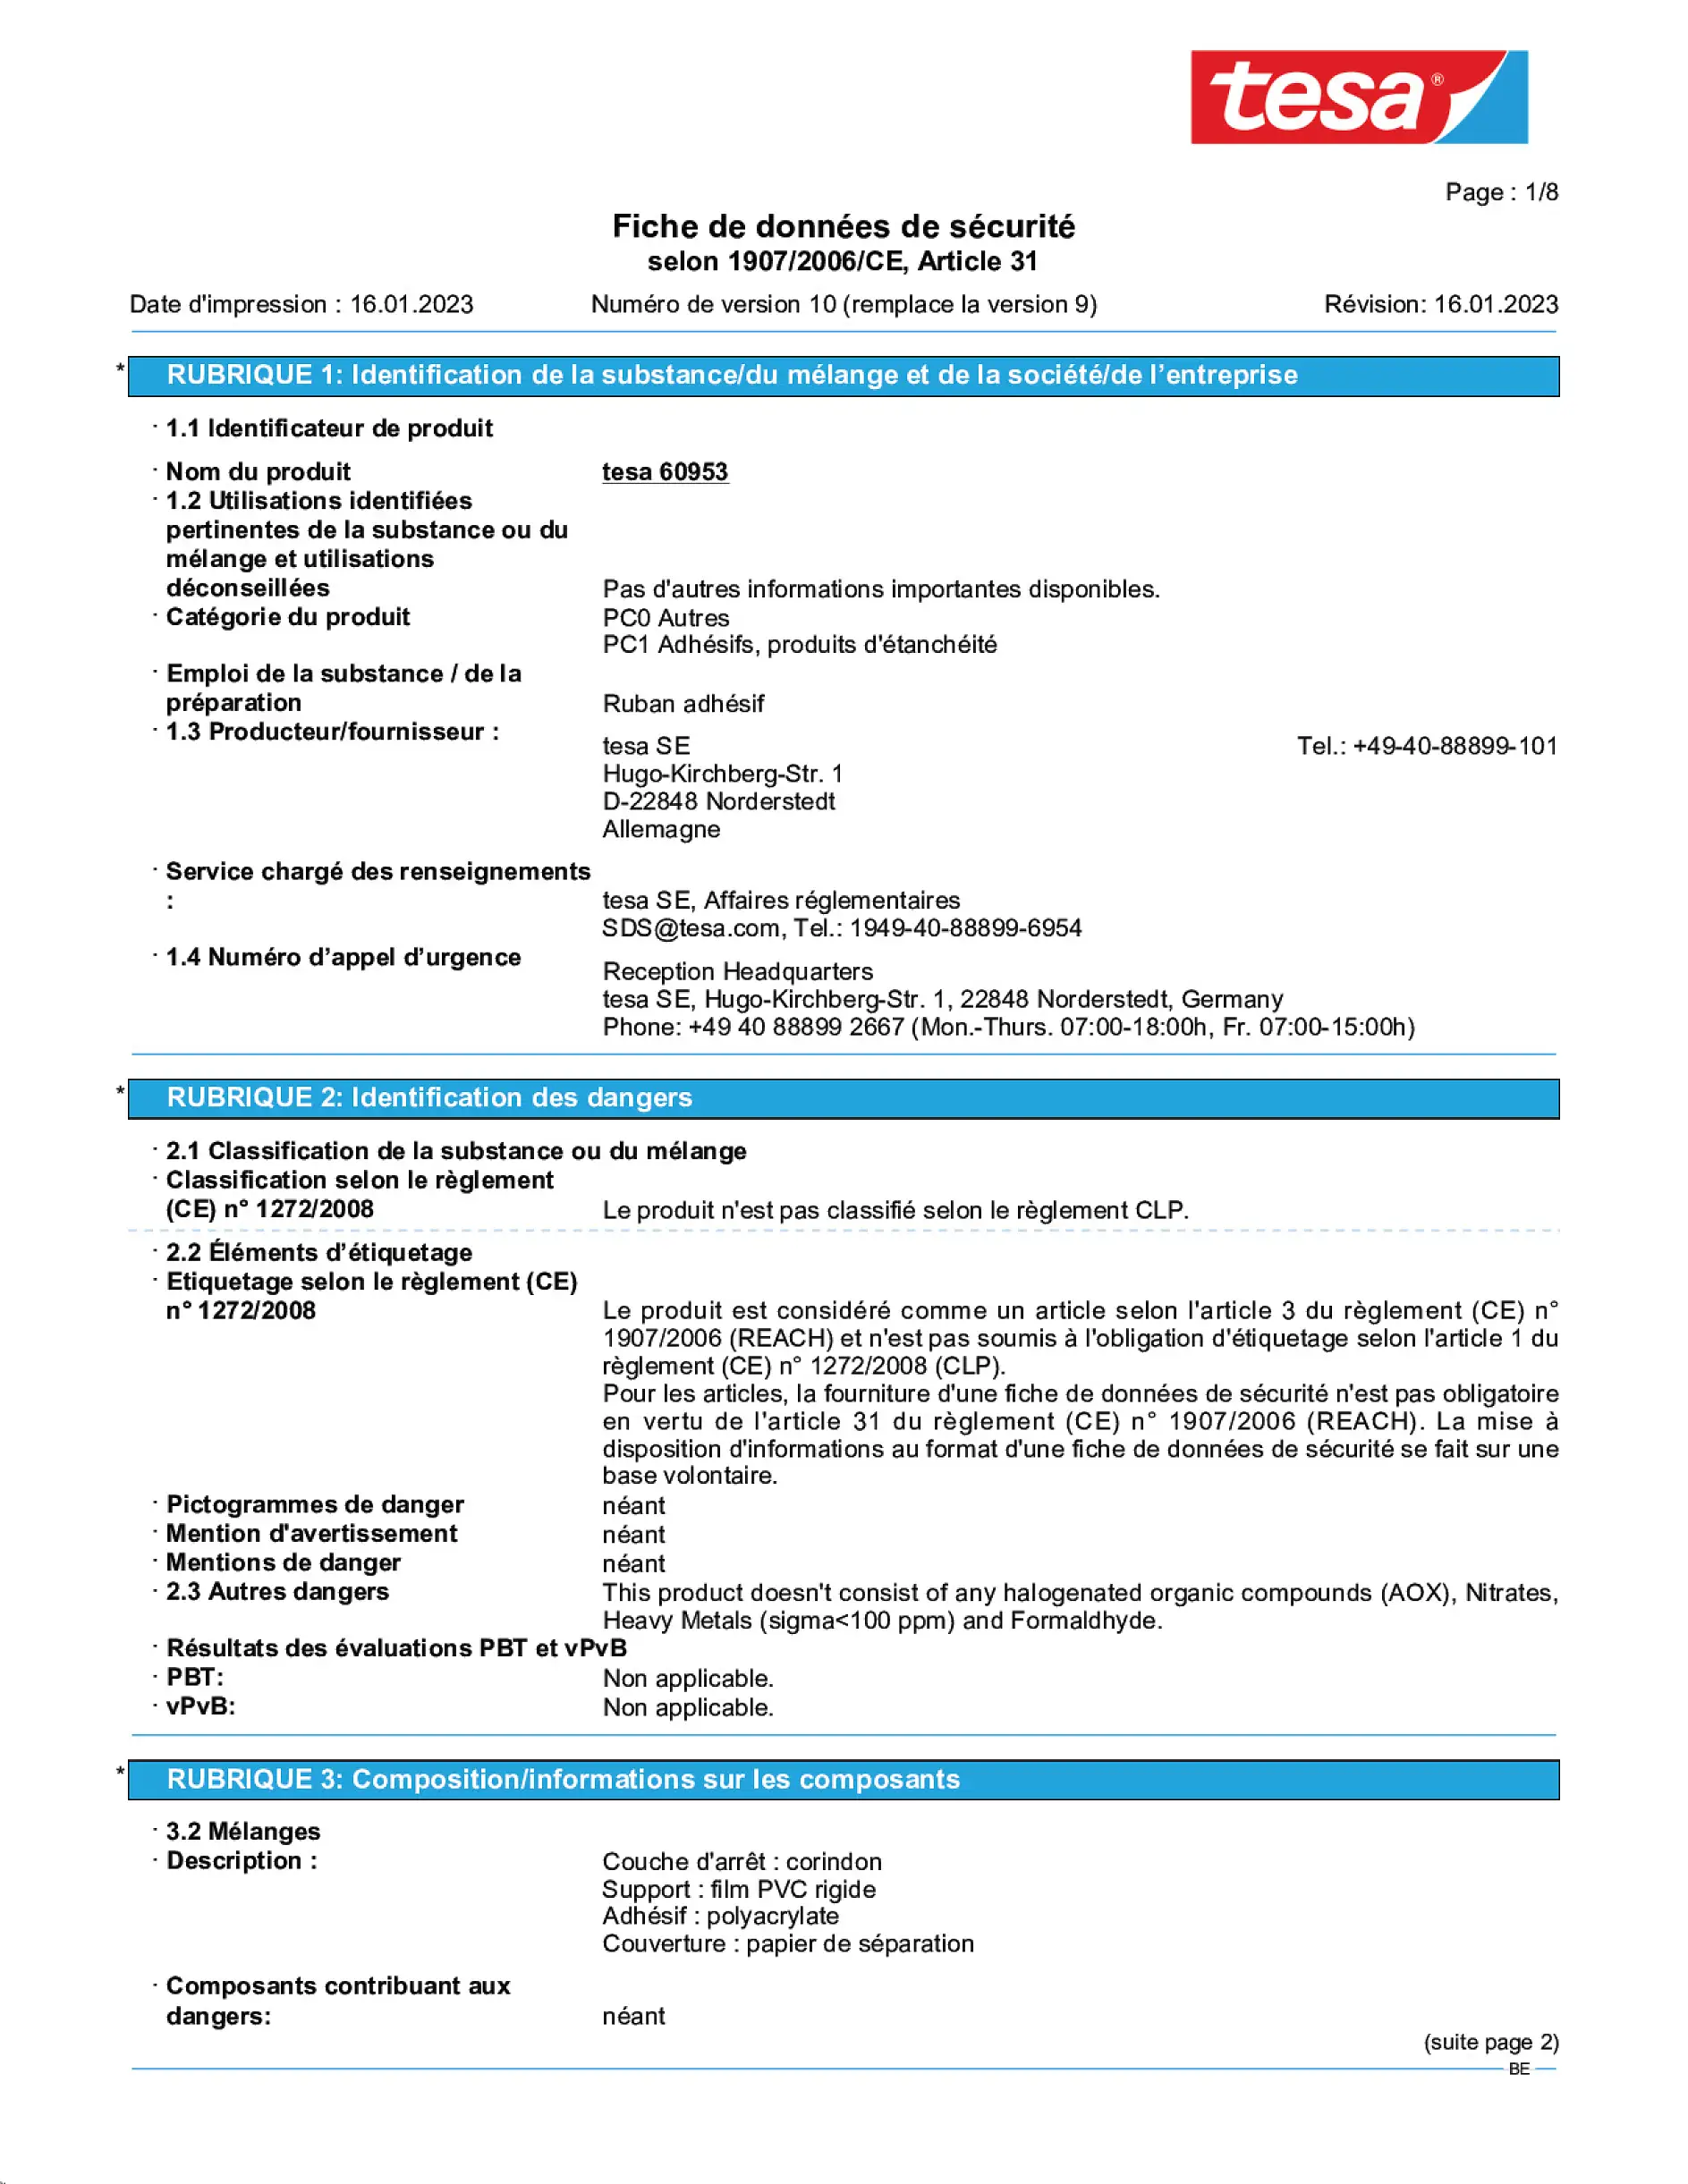 Safety data sheet_tesa® Professional 60953_nl-BE_v10